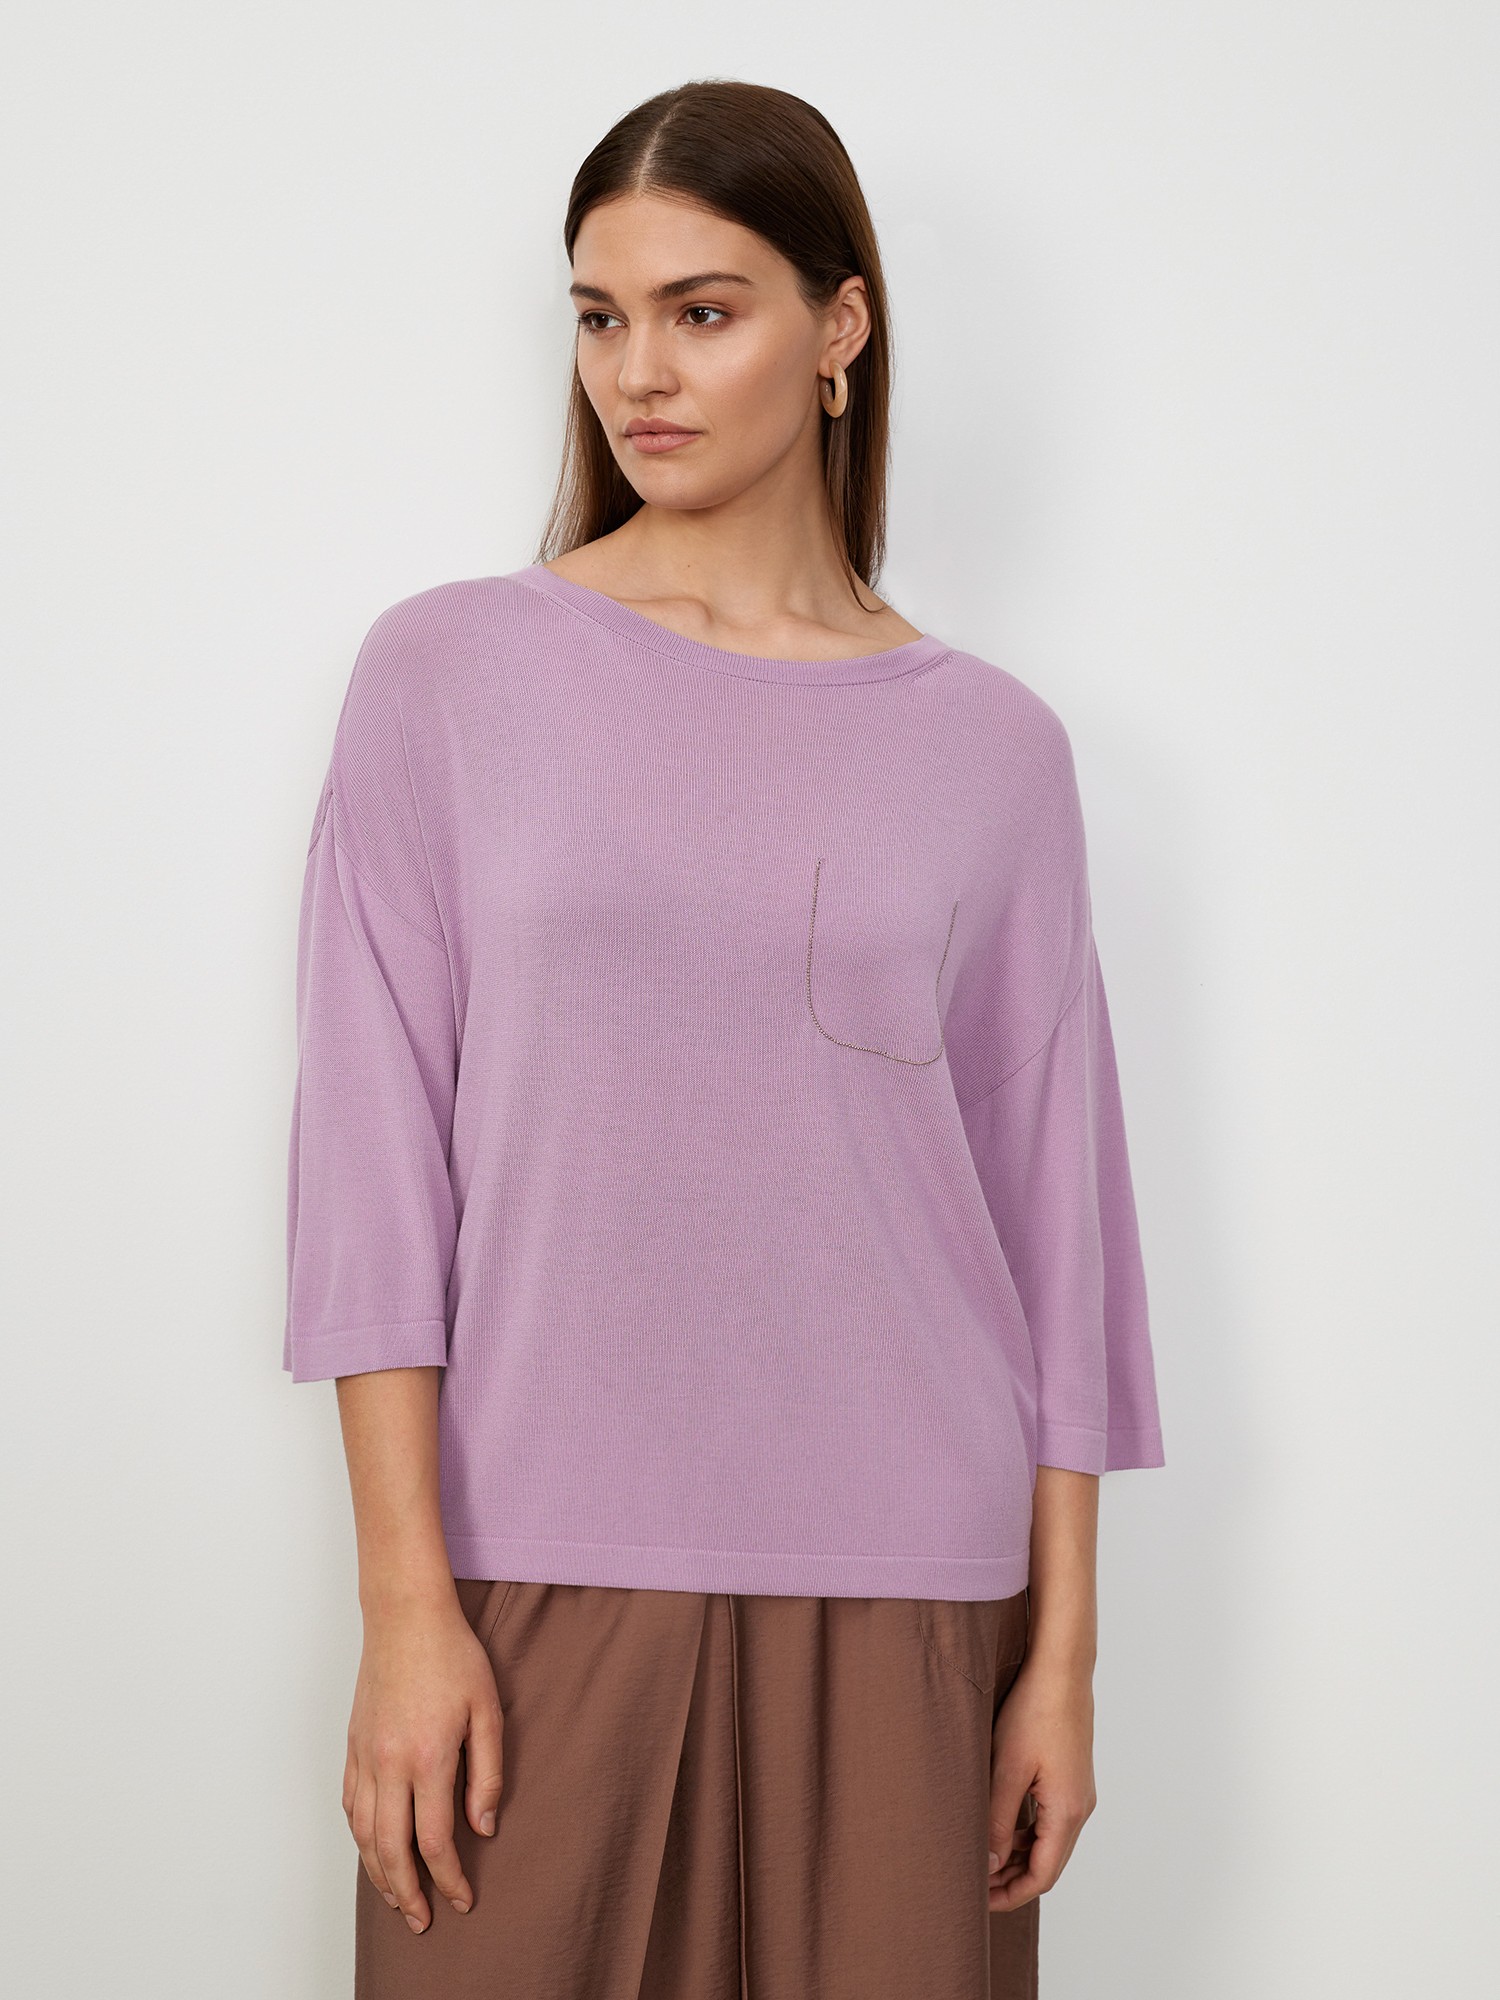 Блуза вязаная с монилью Lalis BL1069V, цвет фиолетовый, размер 46 - фото 1